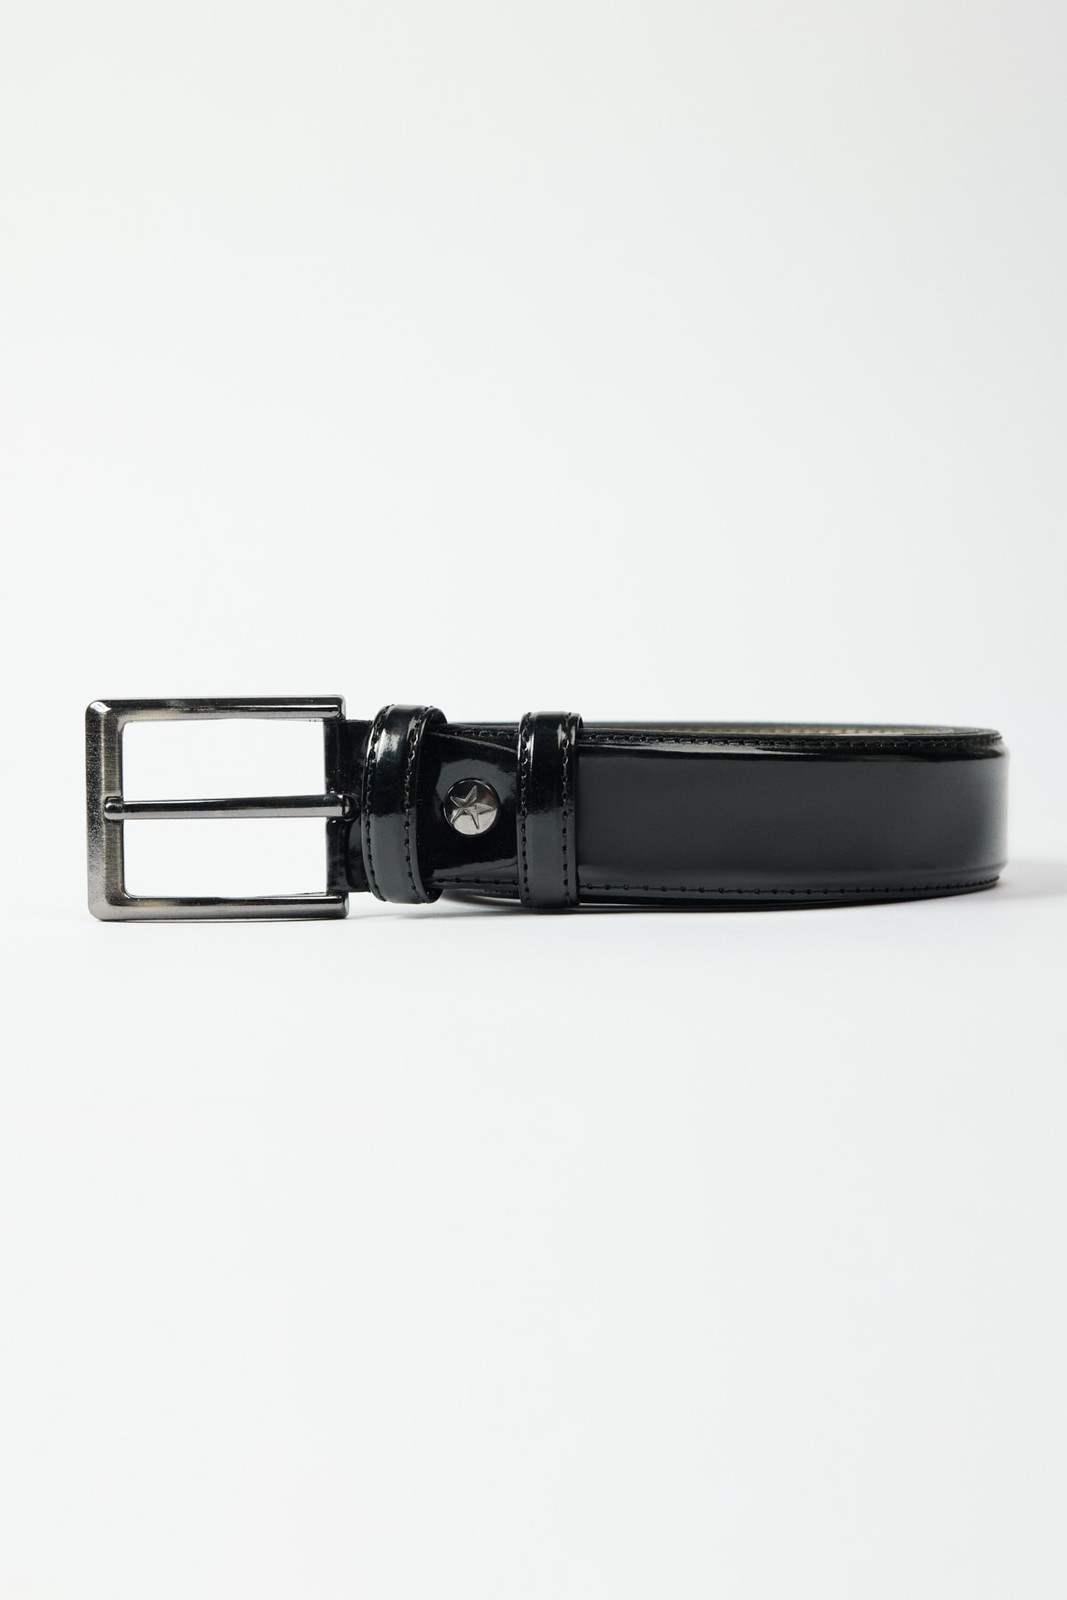 ALTINYILDIZ CLASSICS Men's Black Patent Leather Belt